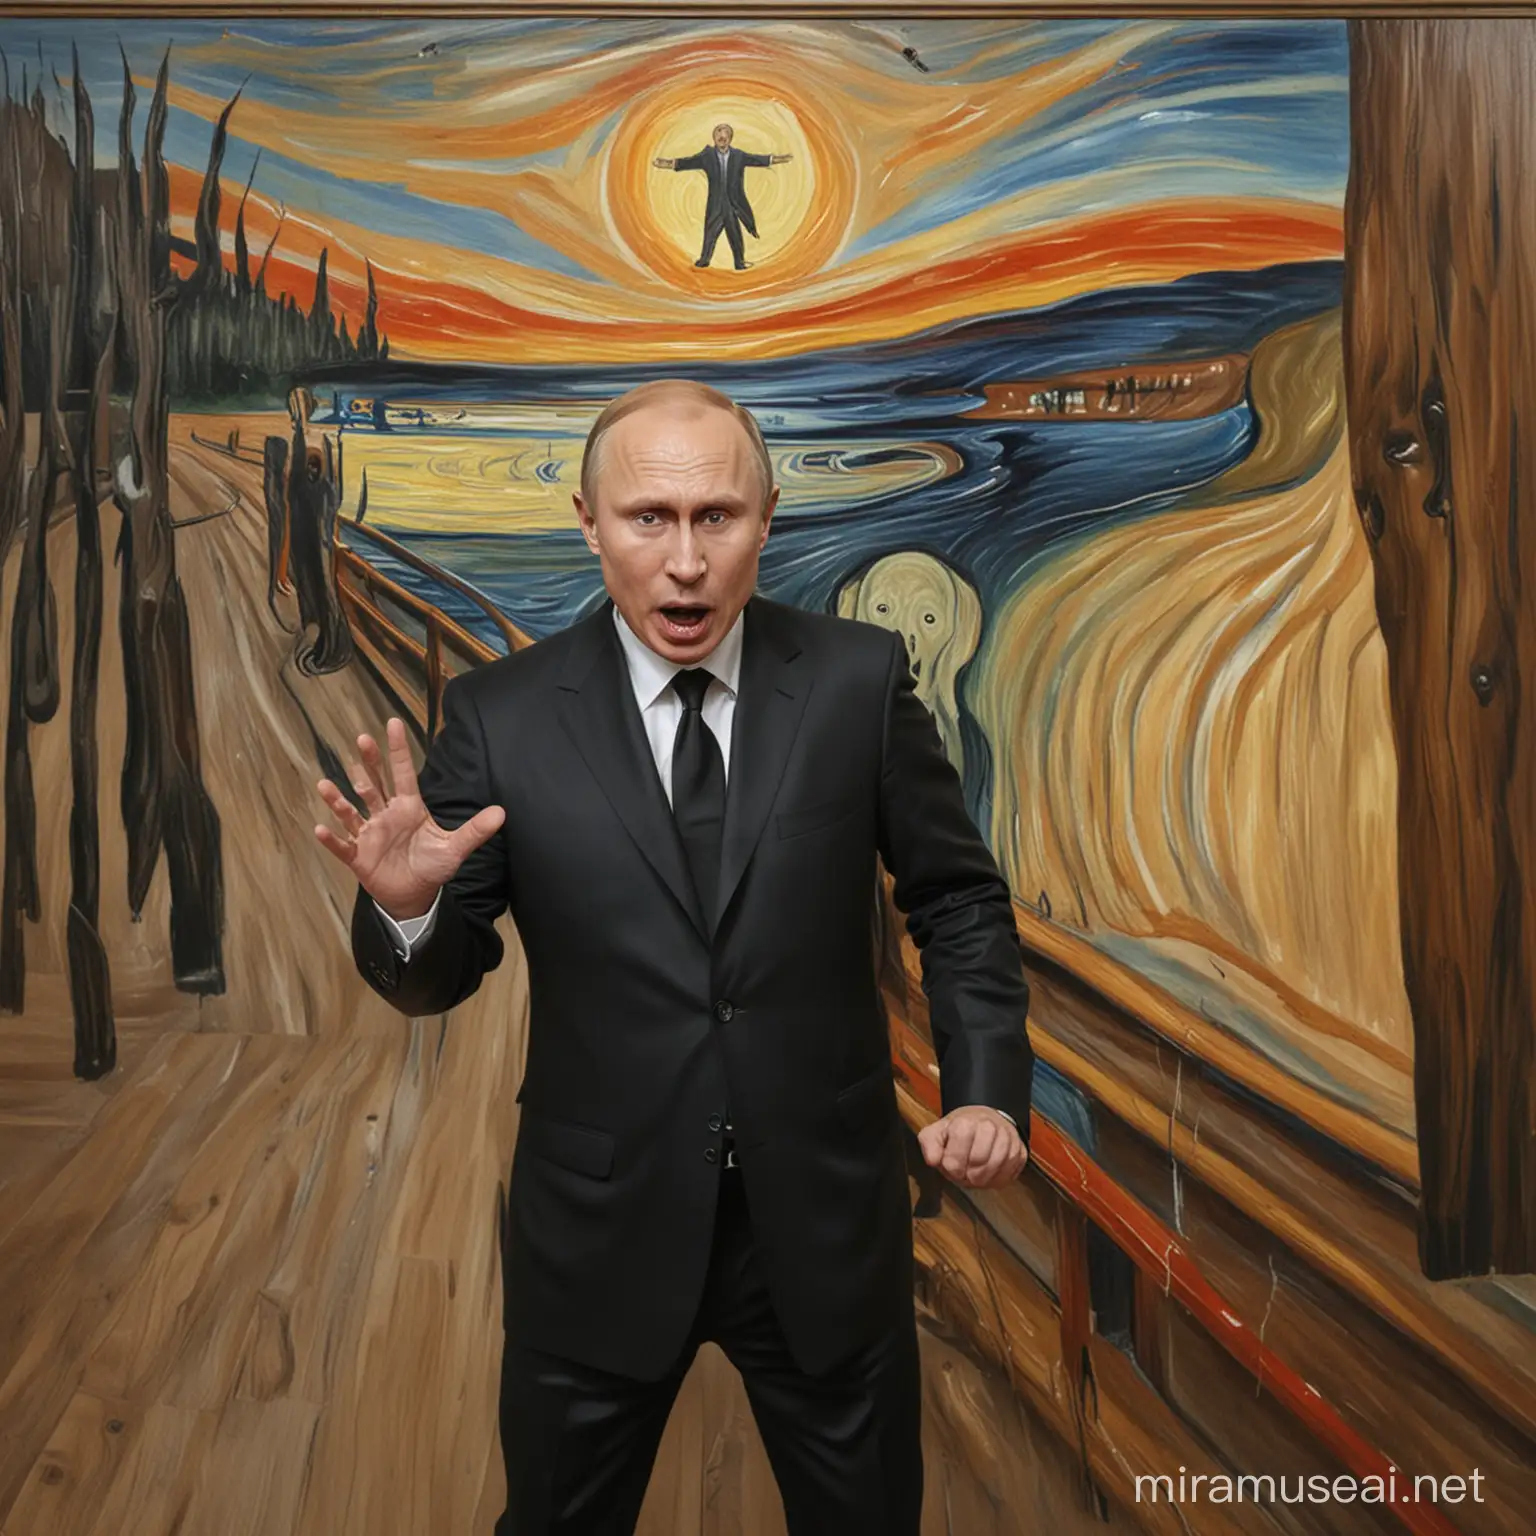 Edvard Munch's painting "the scream" featuring Vladimir Putin as the main character